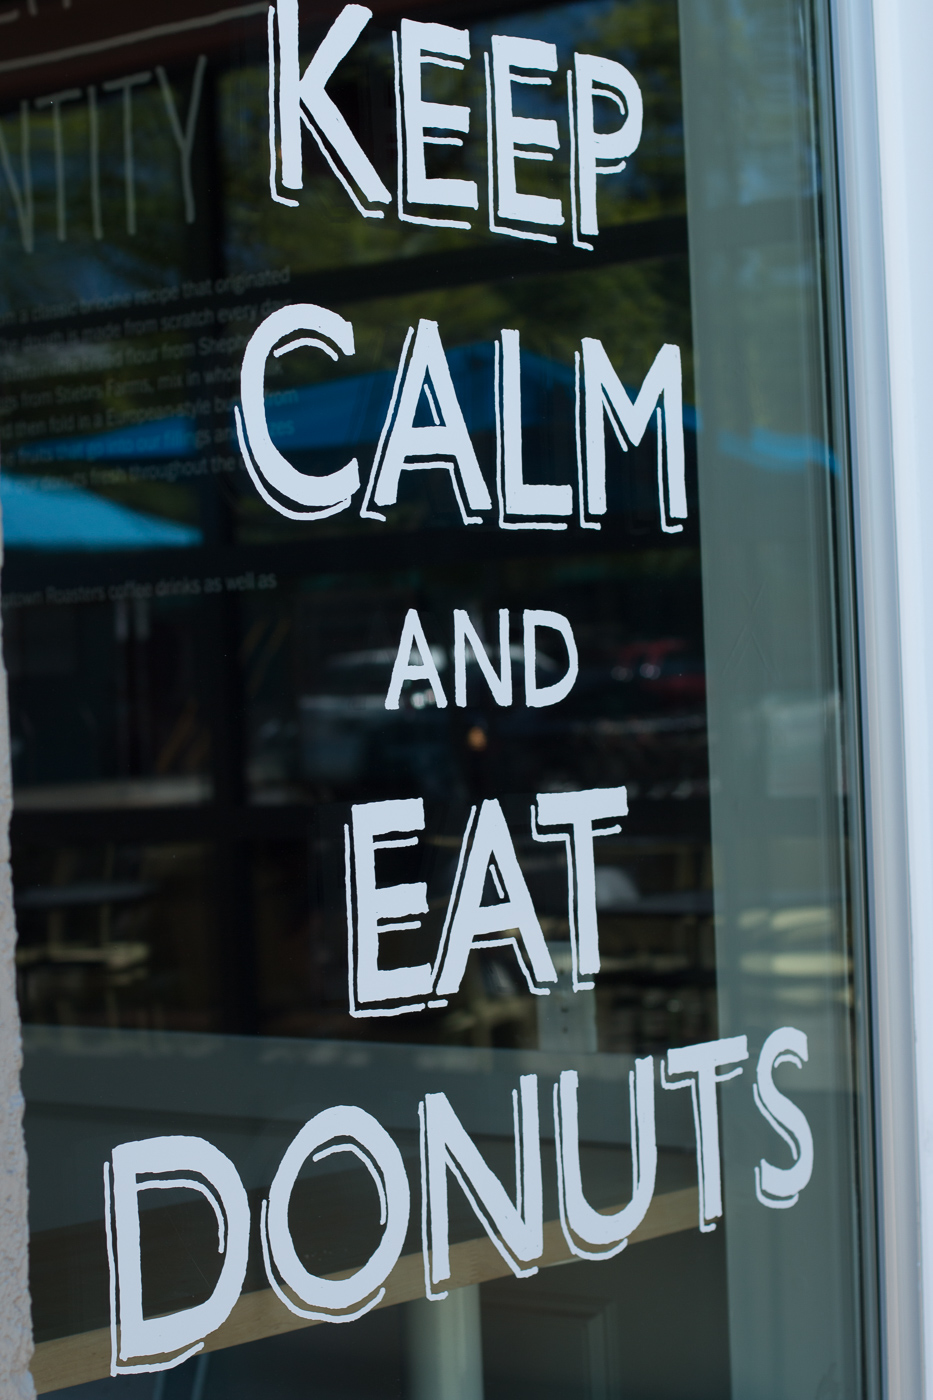 eat donuts keep calm.jpg